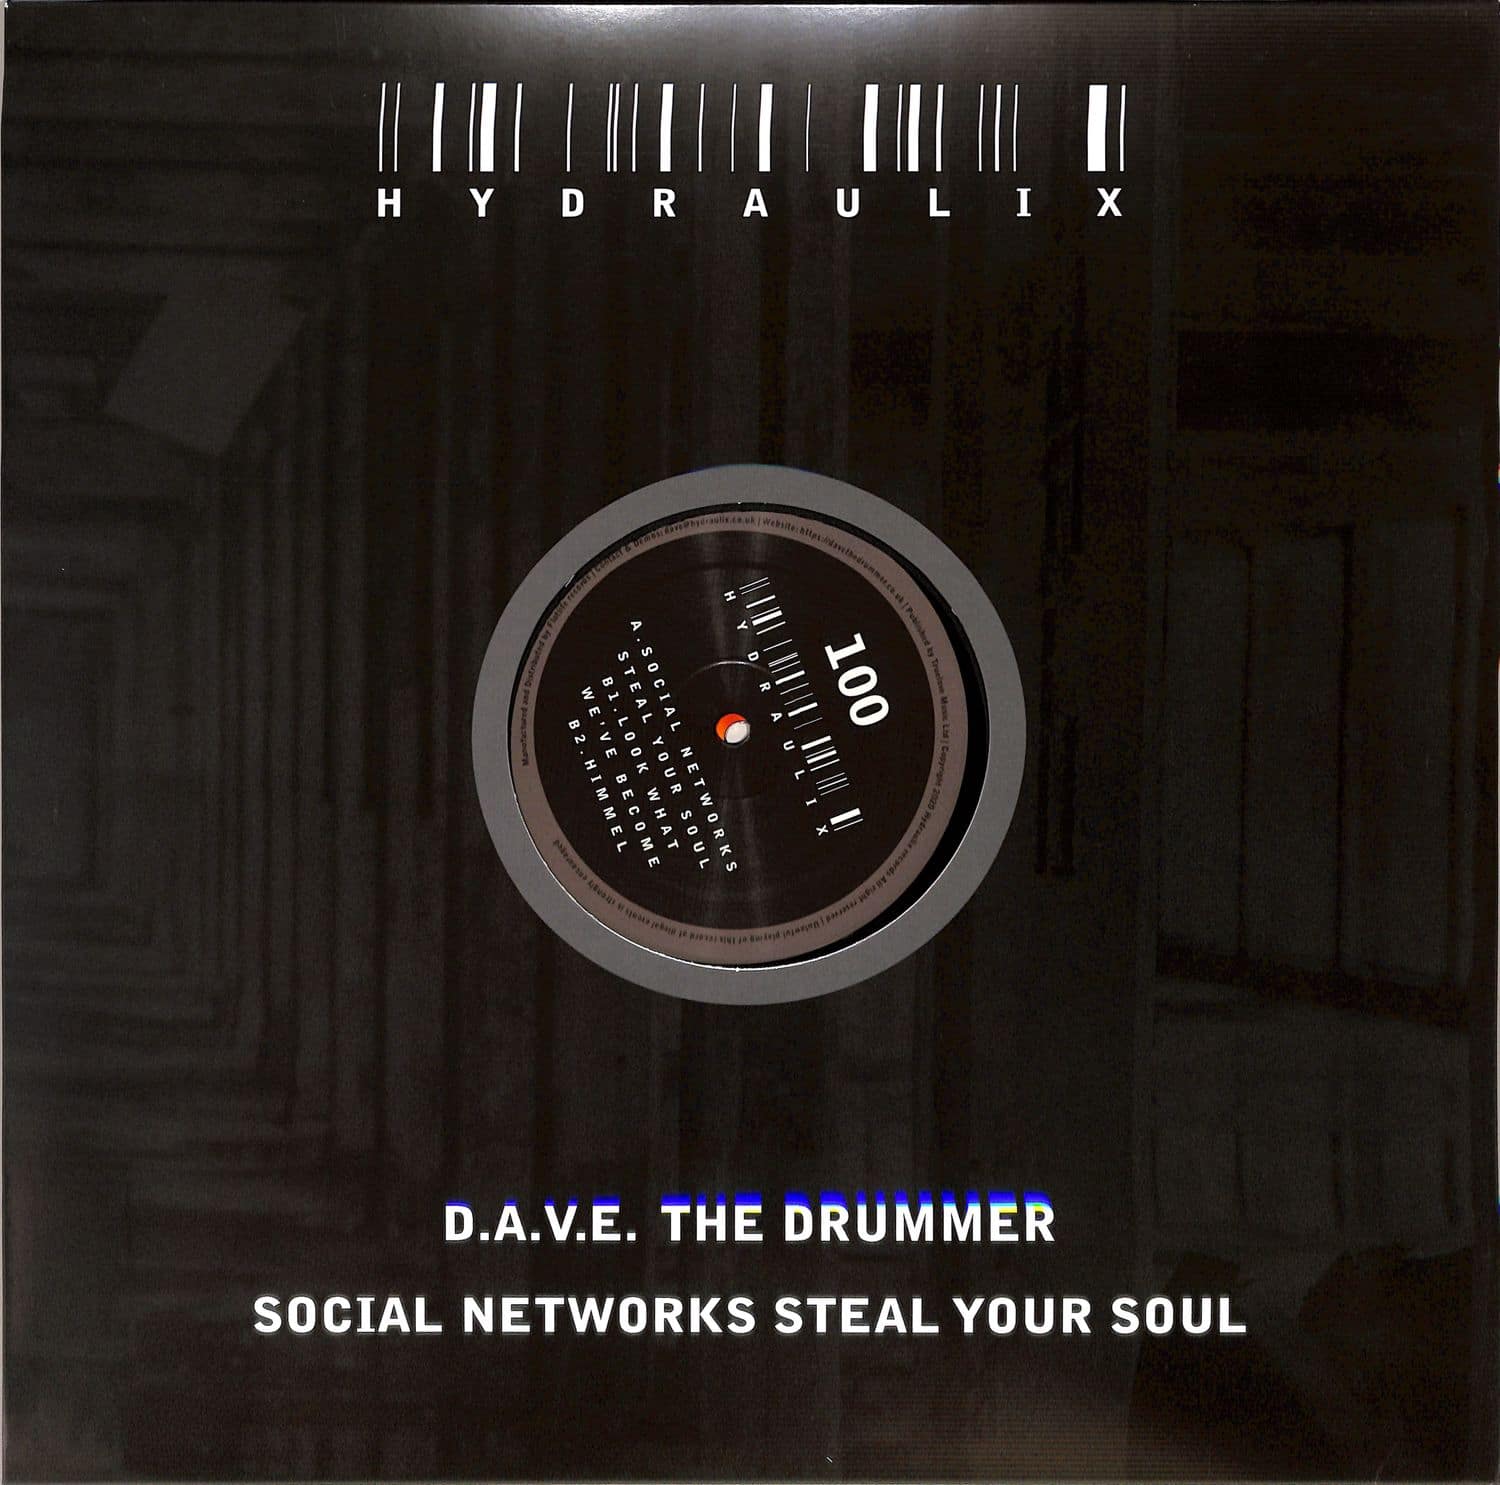 D.A.V.E. The Drummer - SOCIAL NETWORKS STEAL YOUR SOUL 